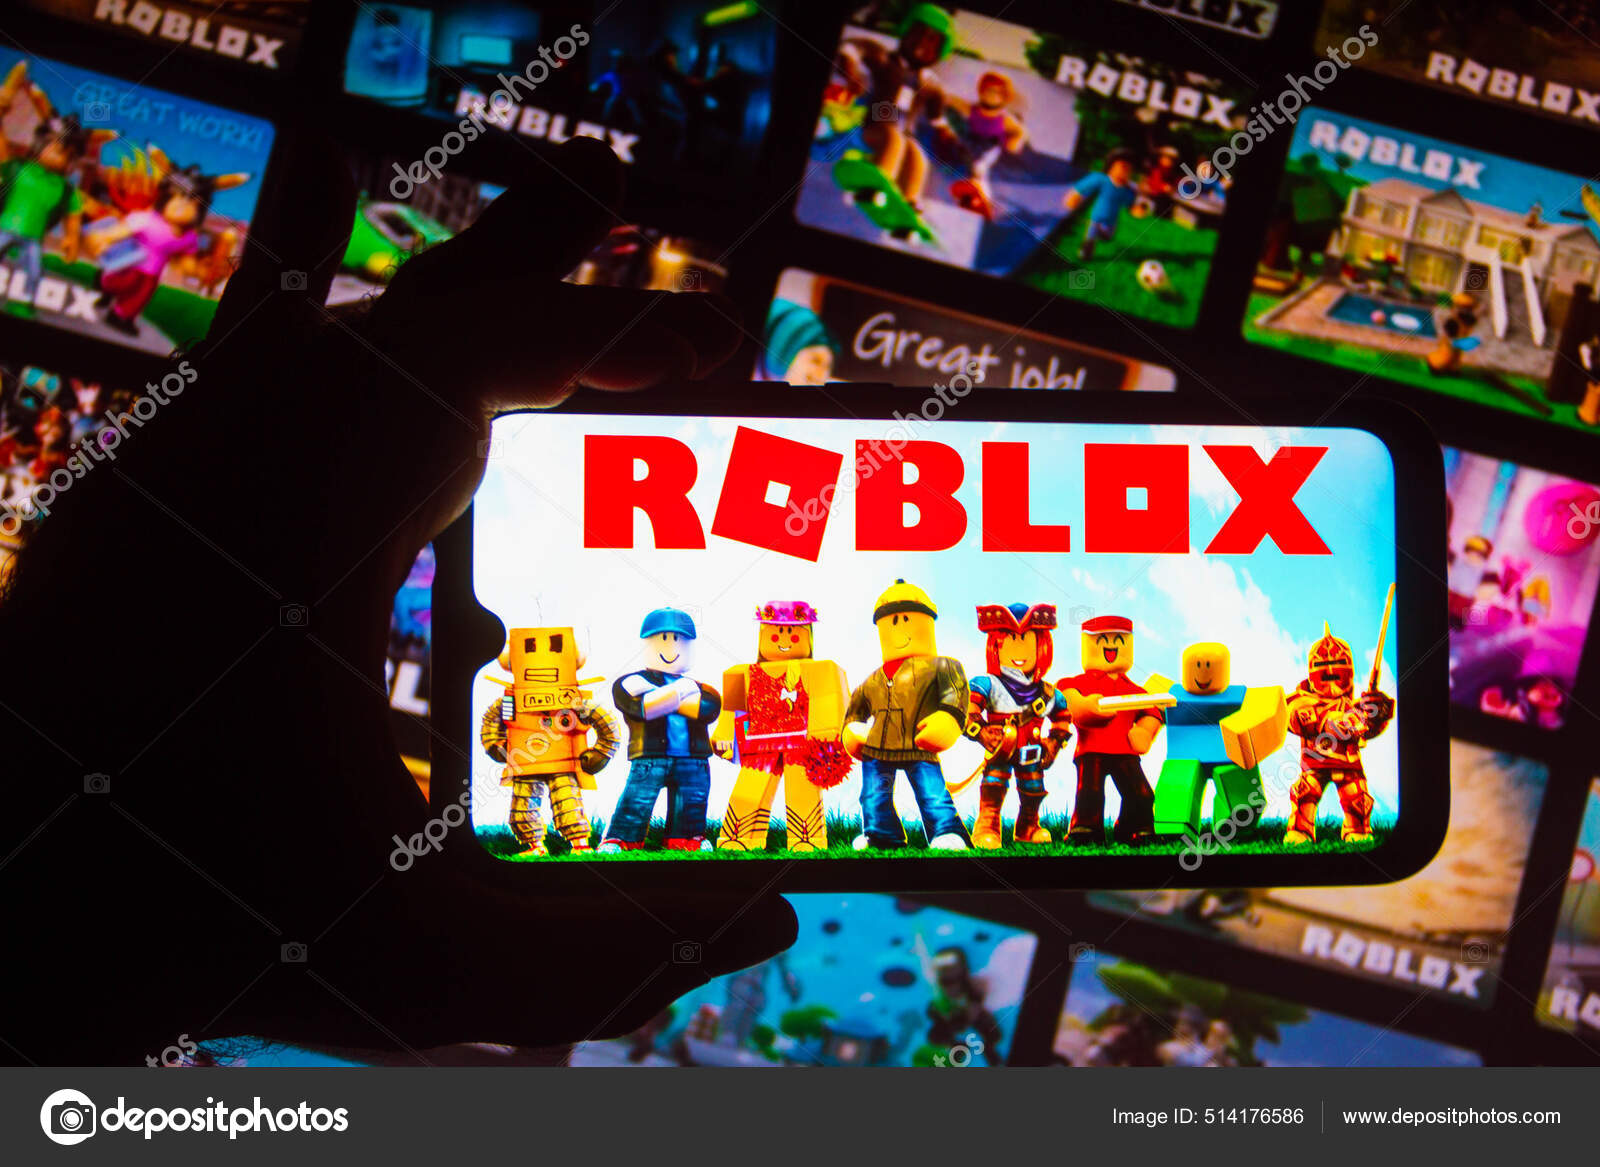 Roblox Brazil DevForum on X: #Roblox #RobloxDev Confira o novo